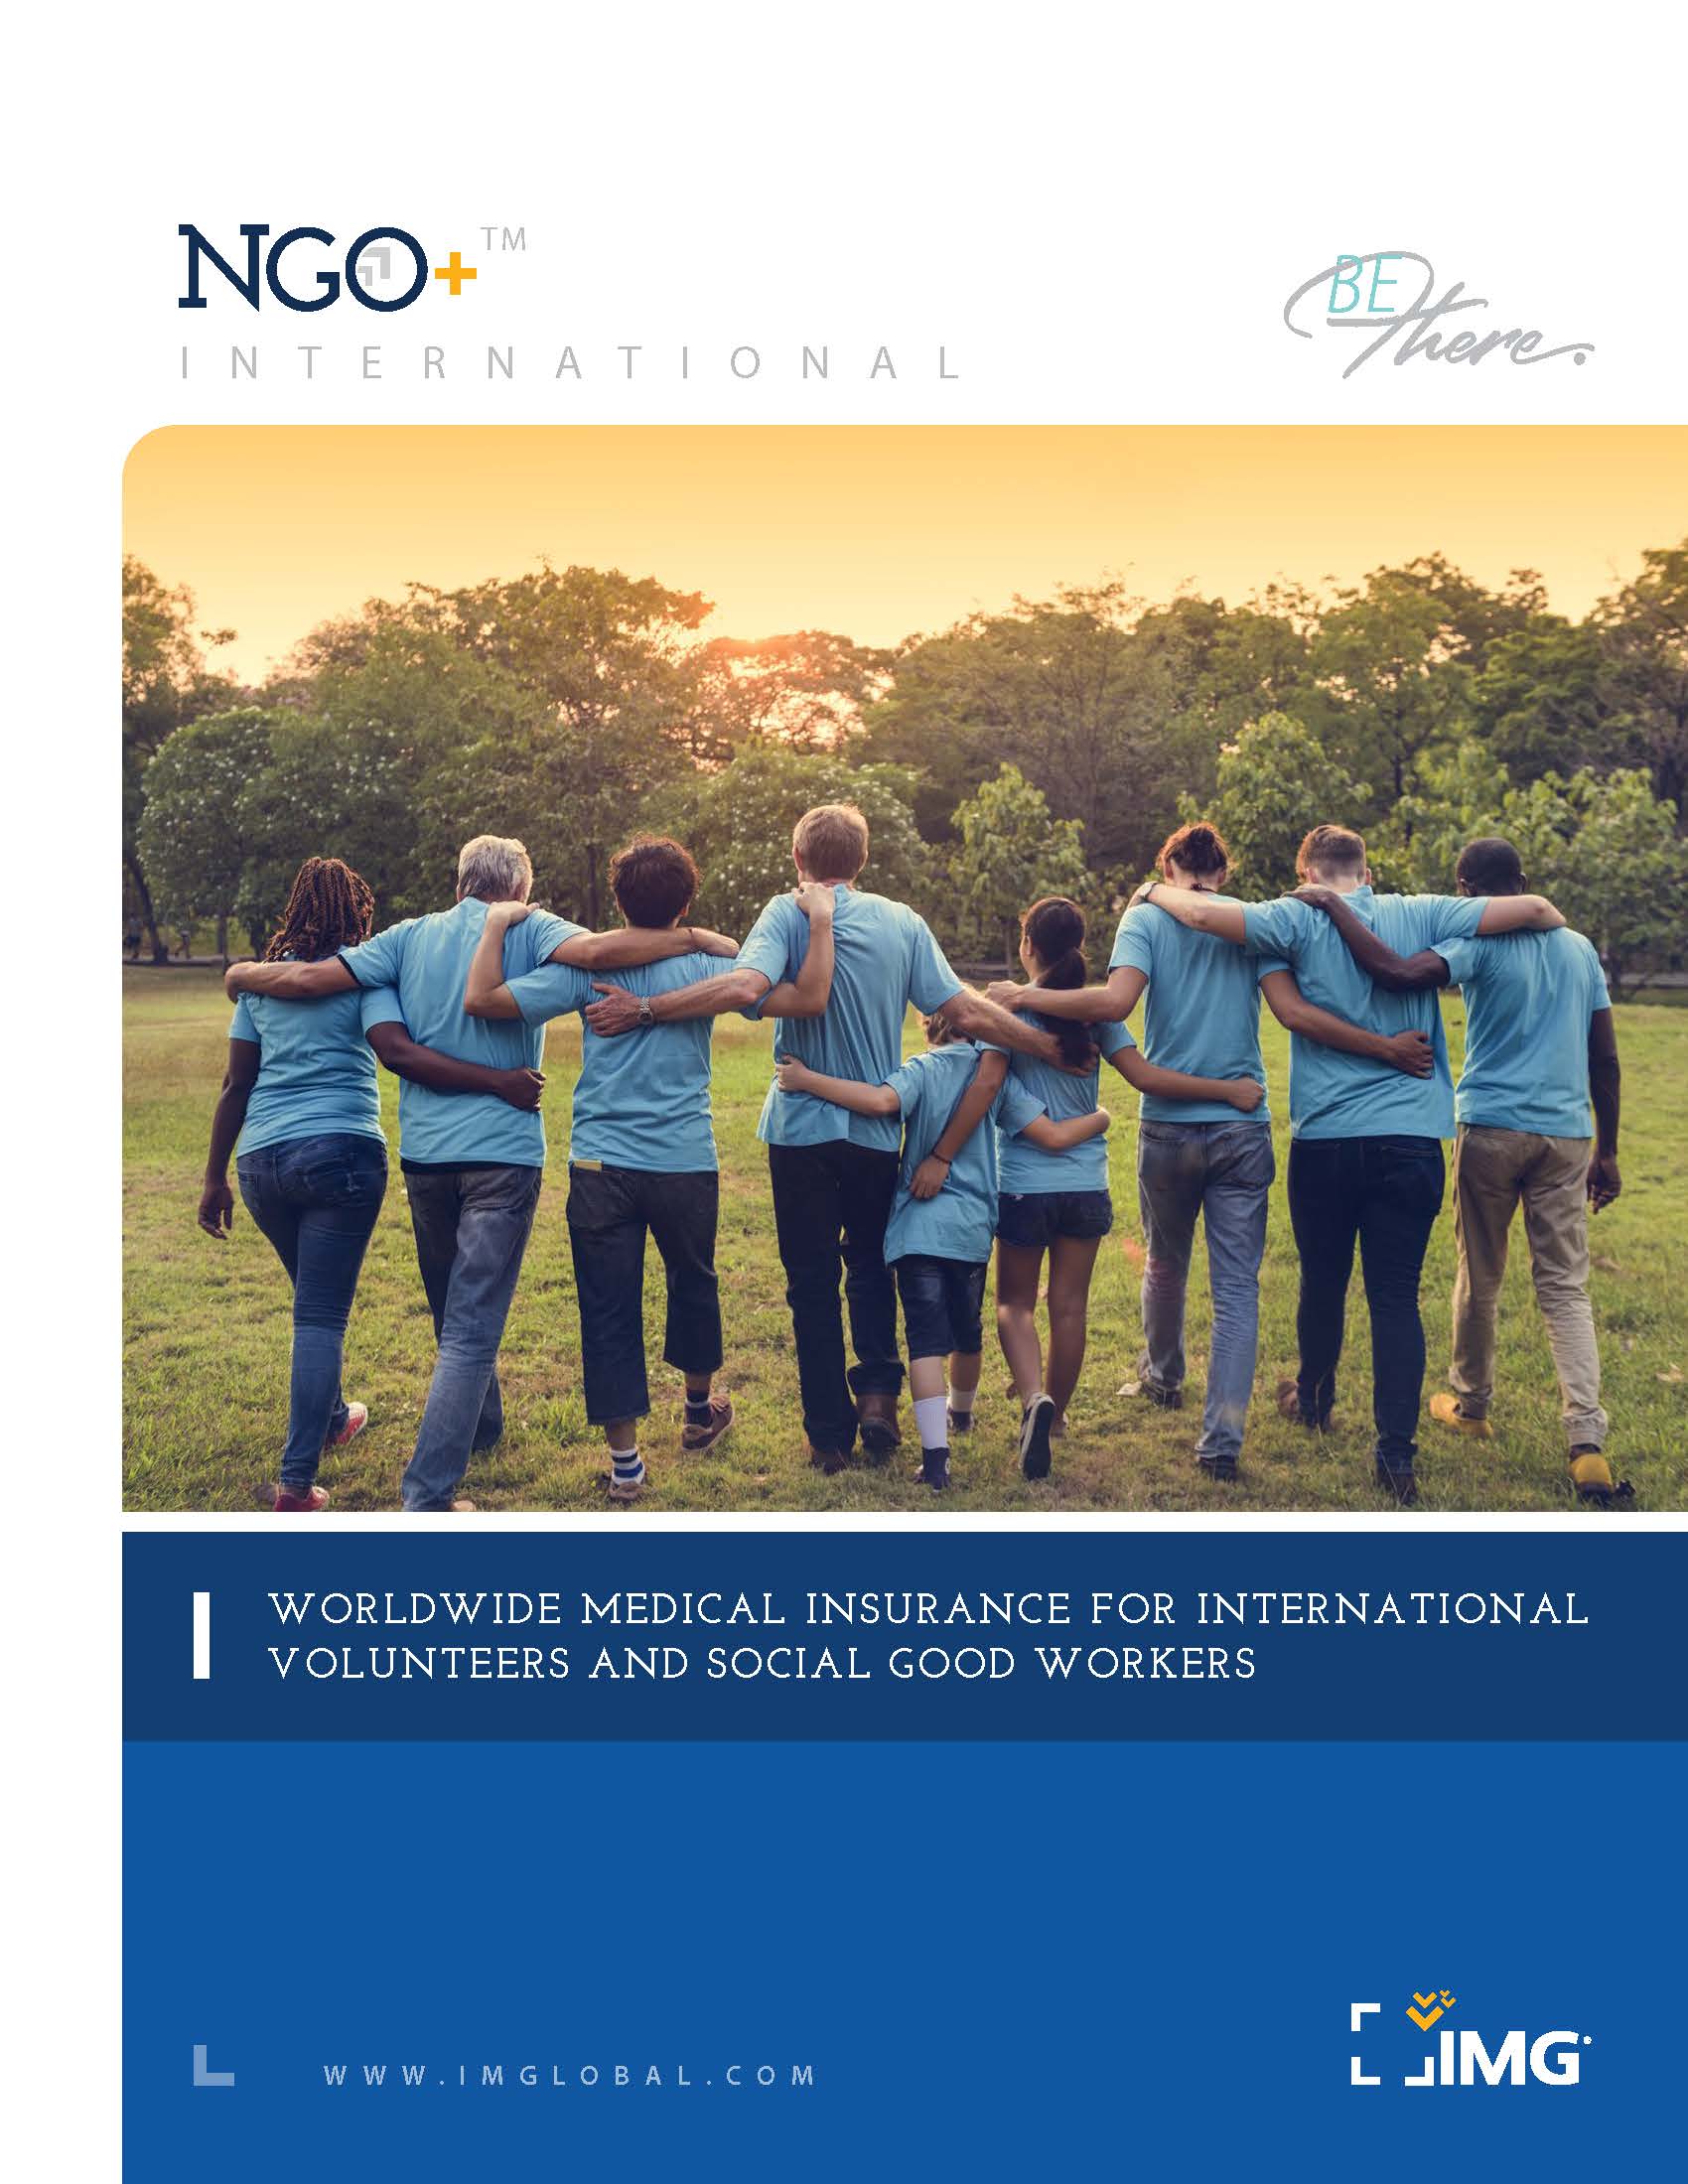 NGO Brochure tumbnail